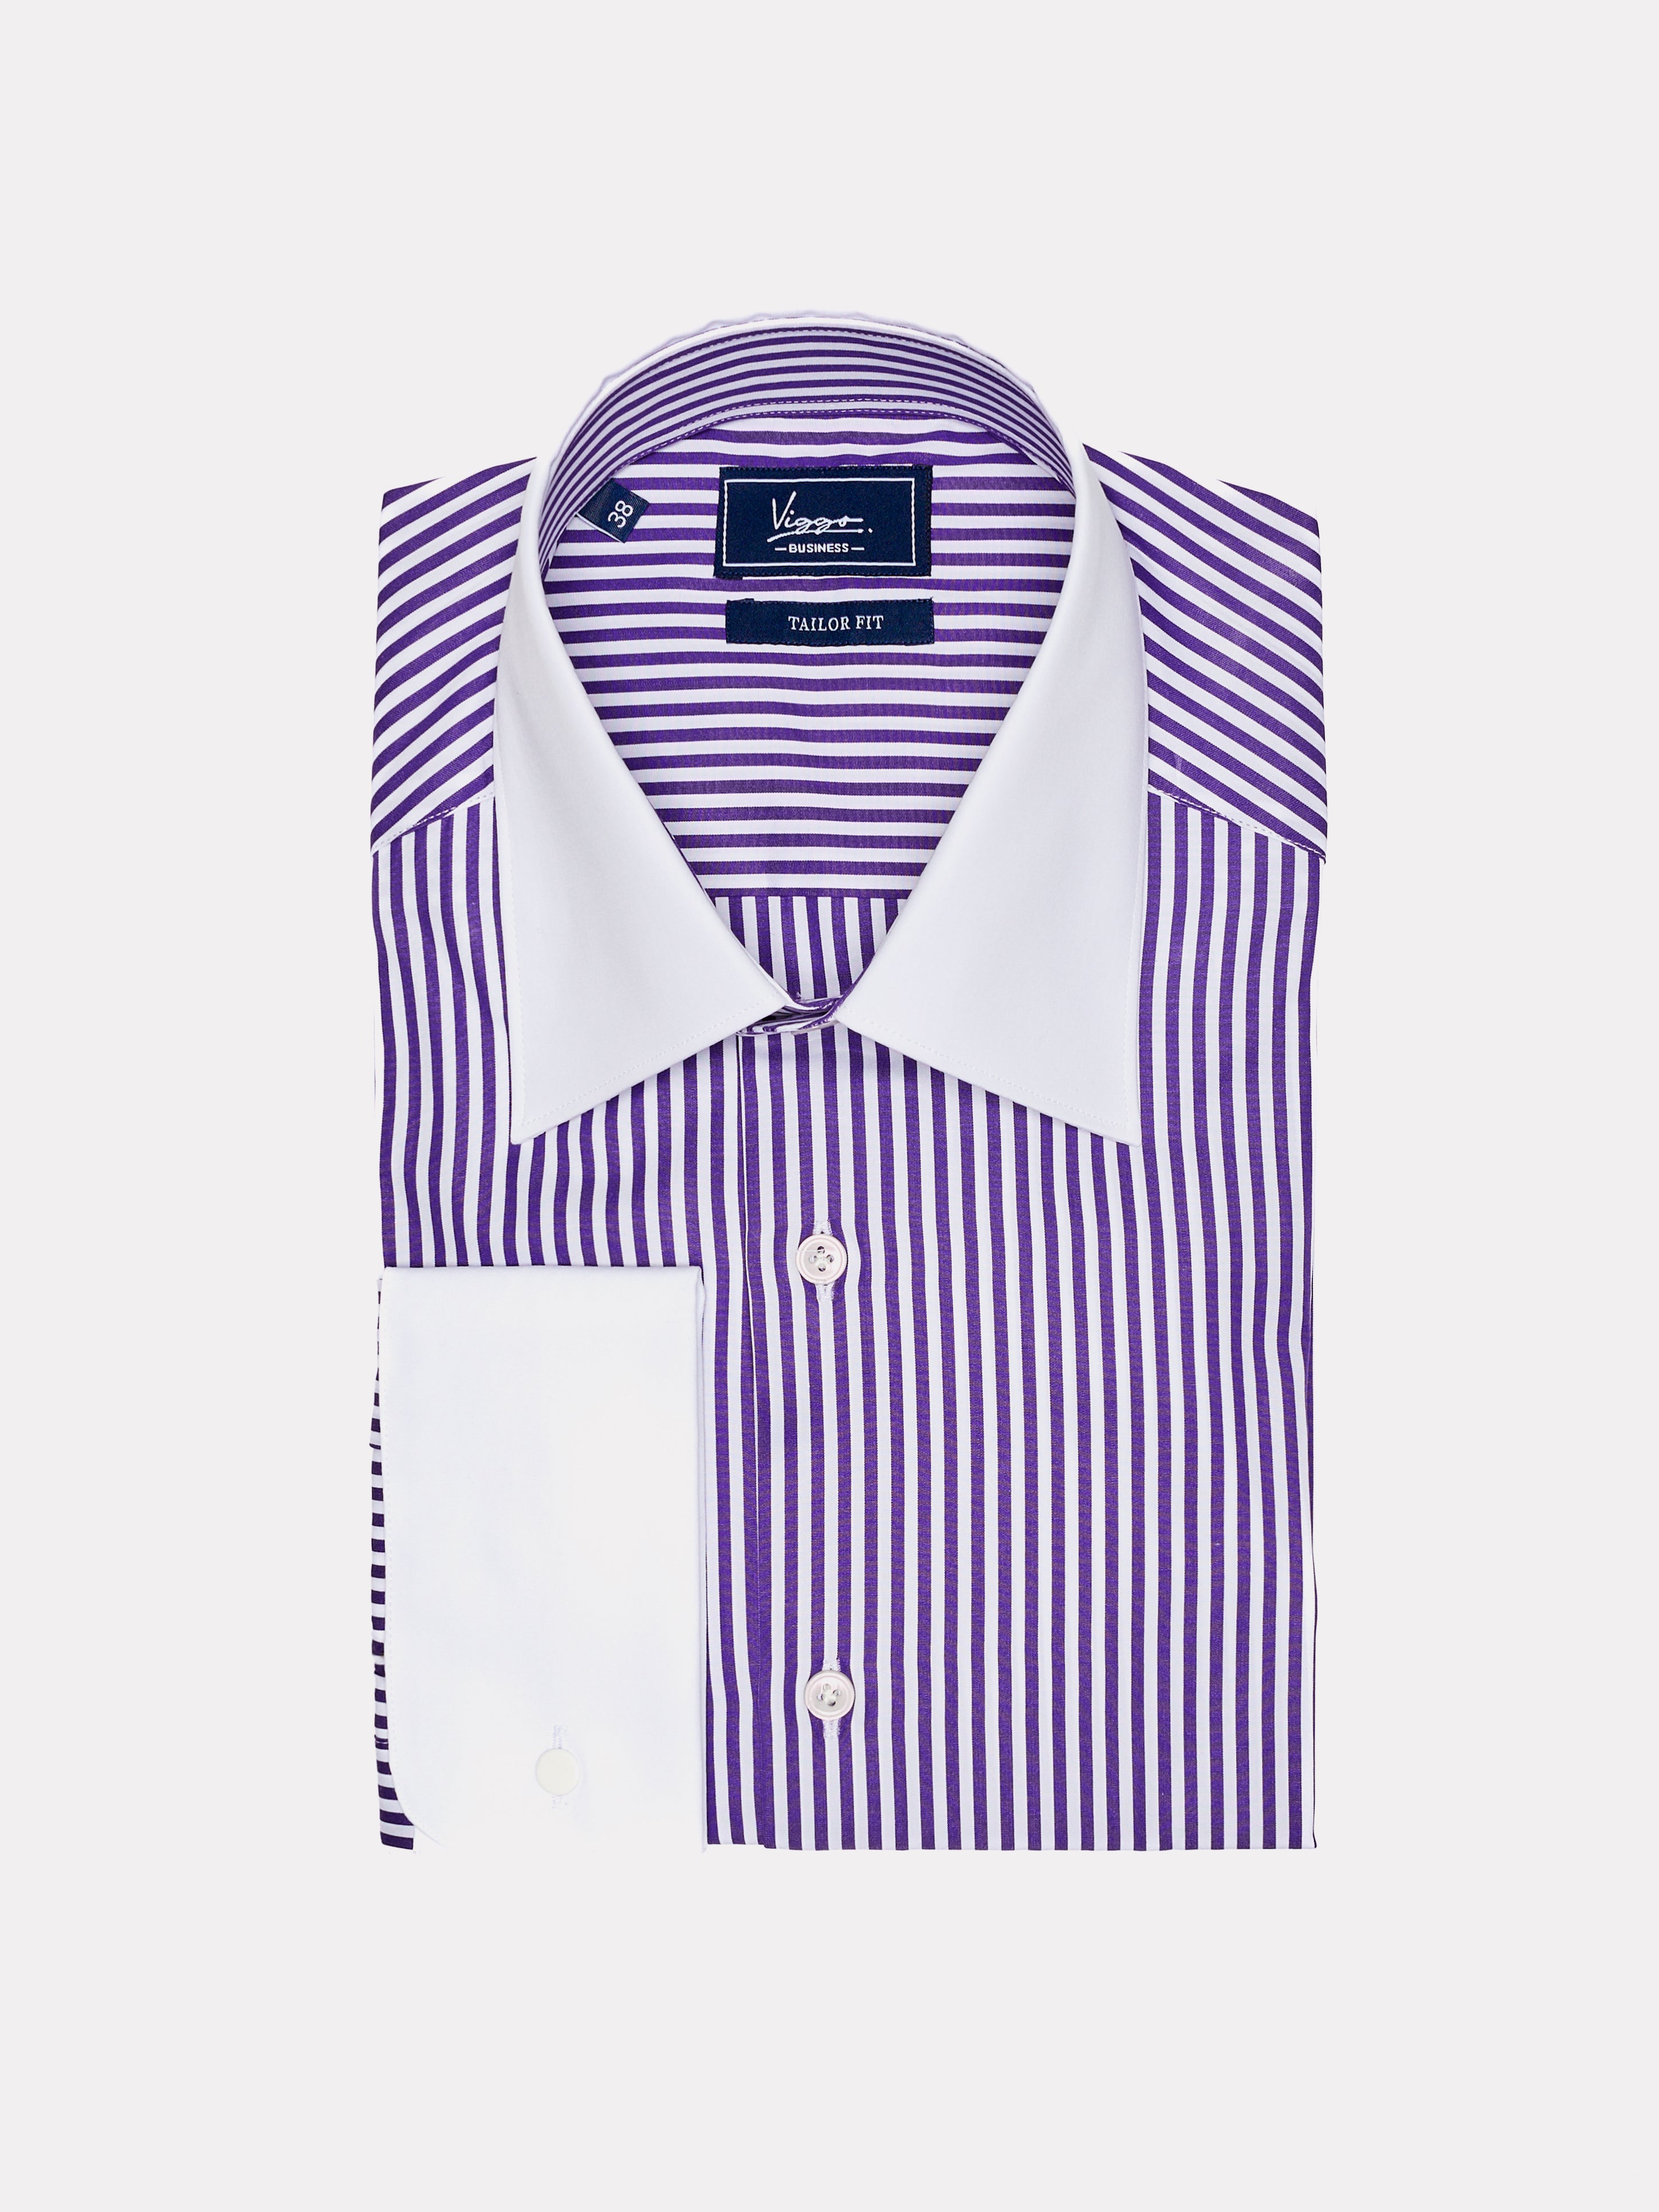 White shirt with purple stripes, button cuffs